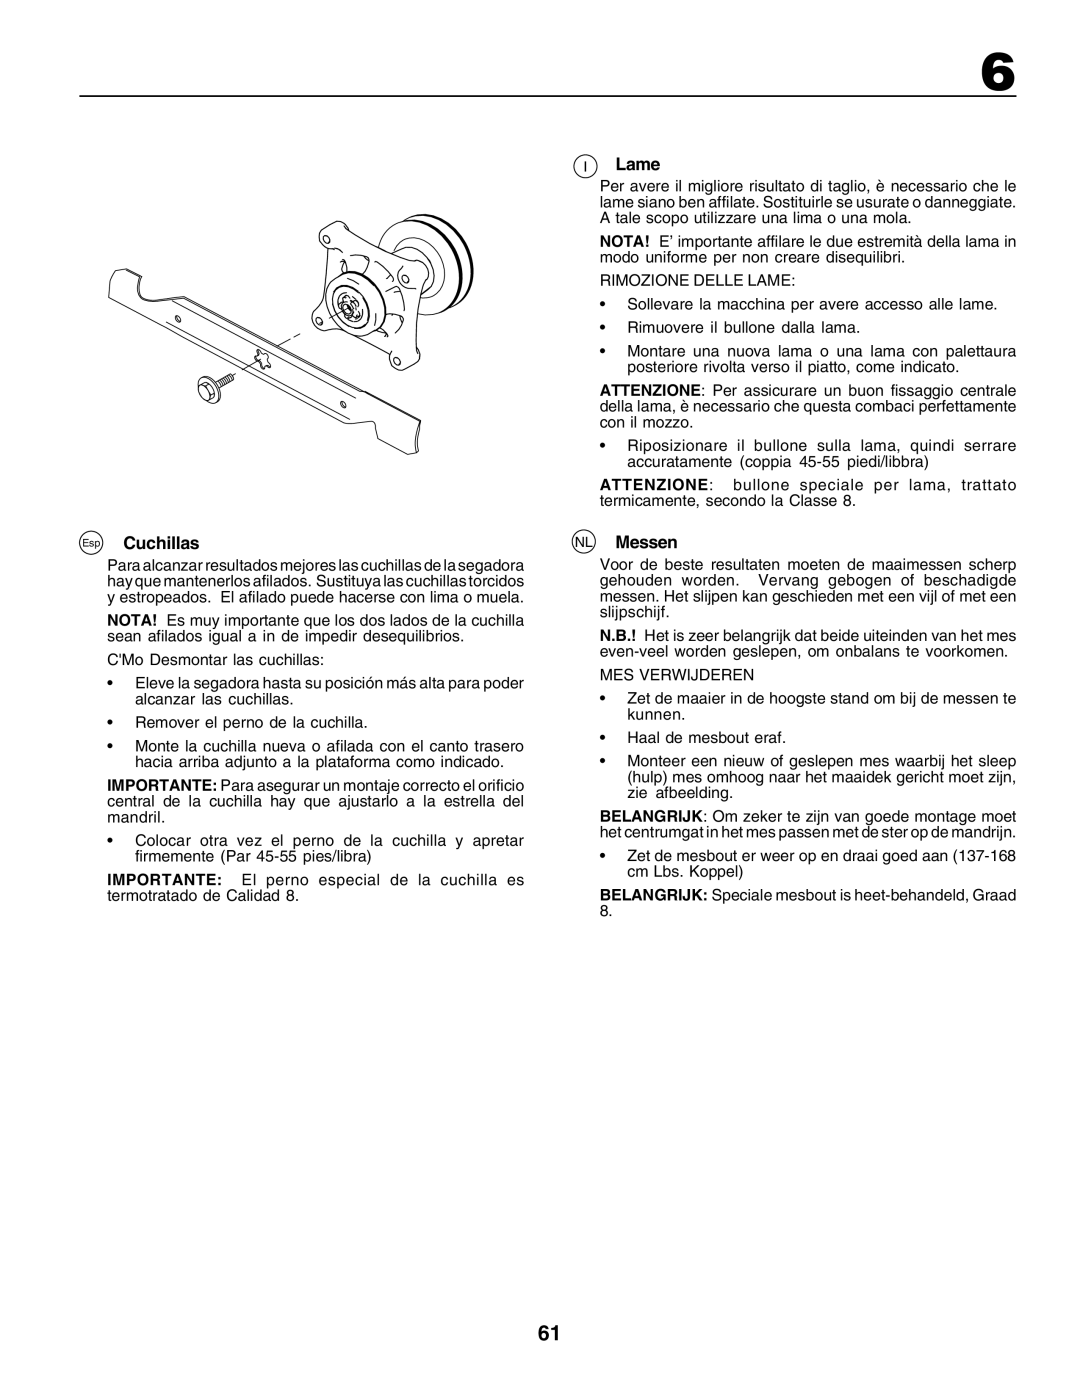 Husqvarna GTH250 instruction manual Esp Cuchillas, Lame, NL Messen 